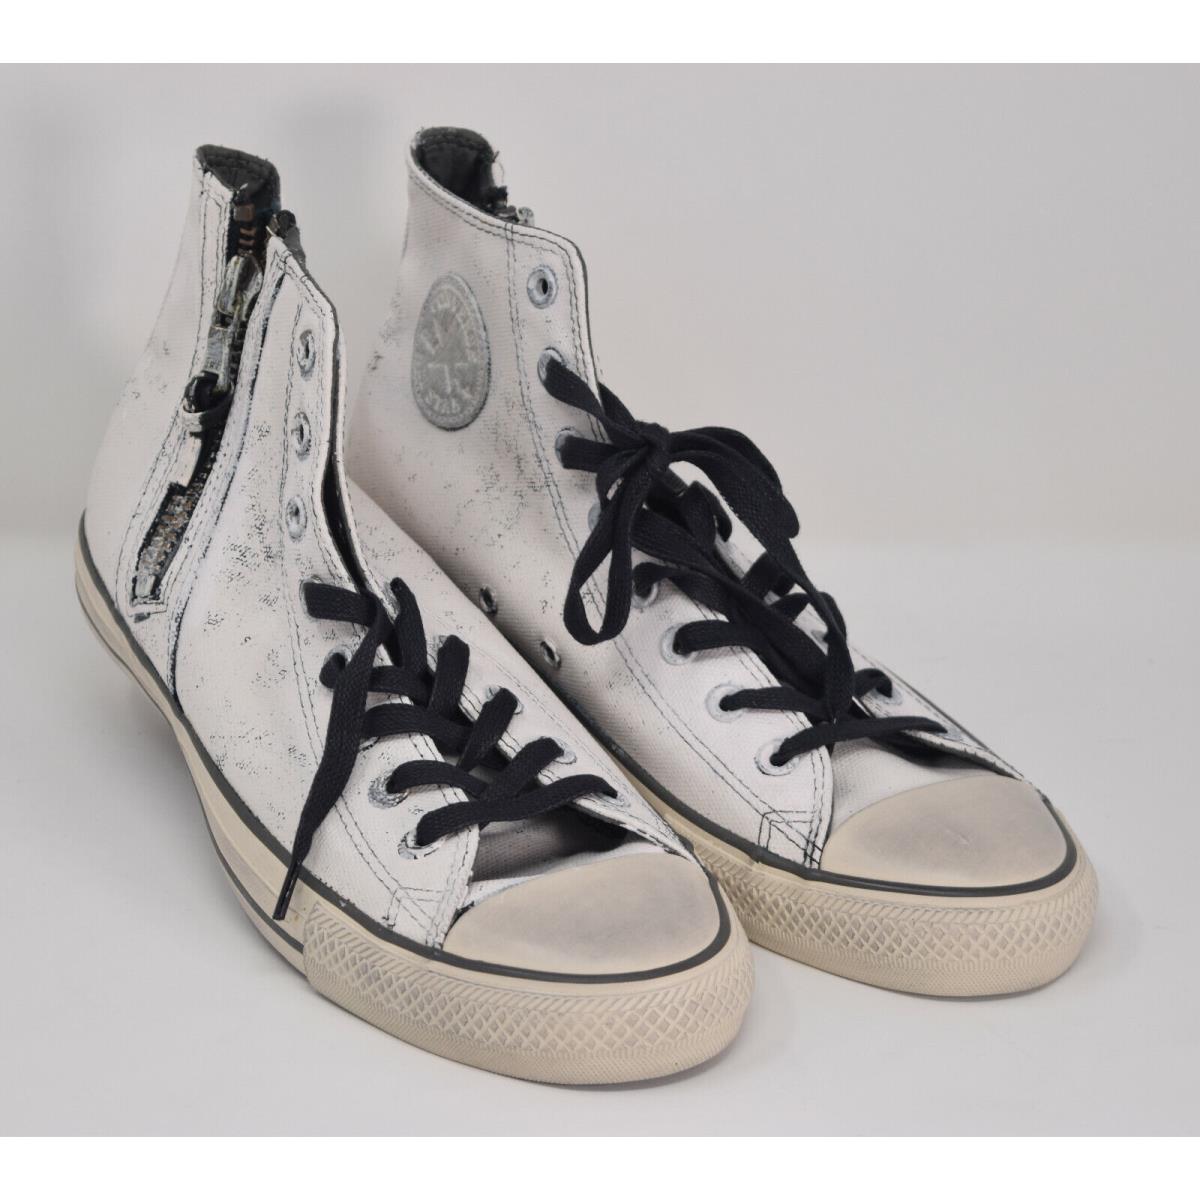 Converse x John Varvatos Taylor All Star Side Zip Shoes Mens 11 US